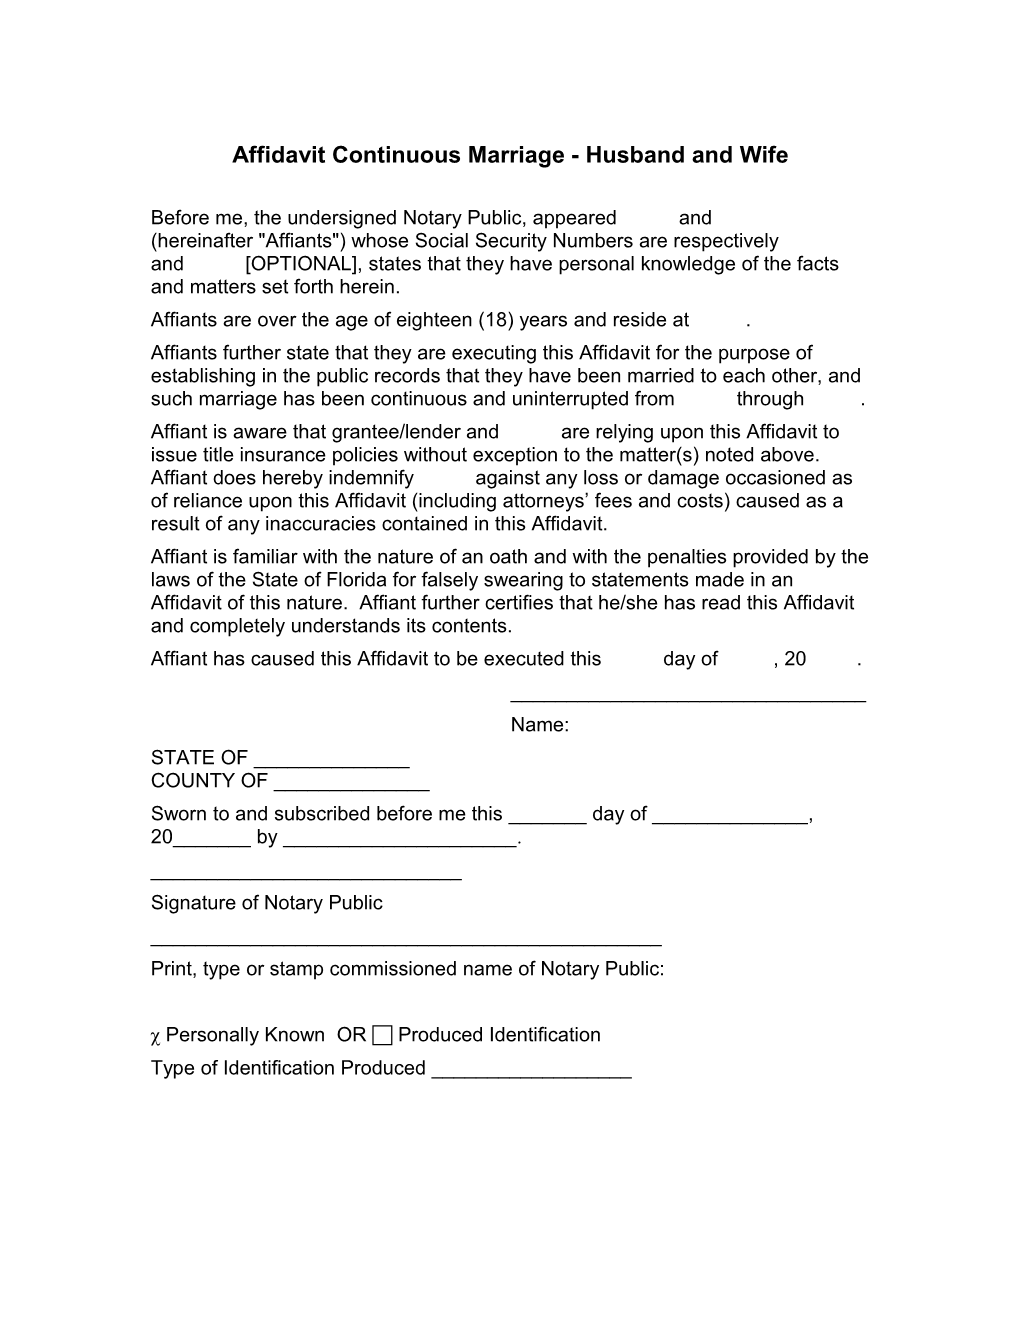 Florida Affidavit of Continuous Marriage